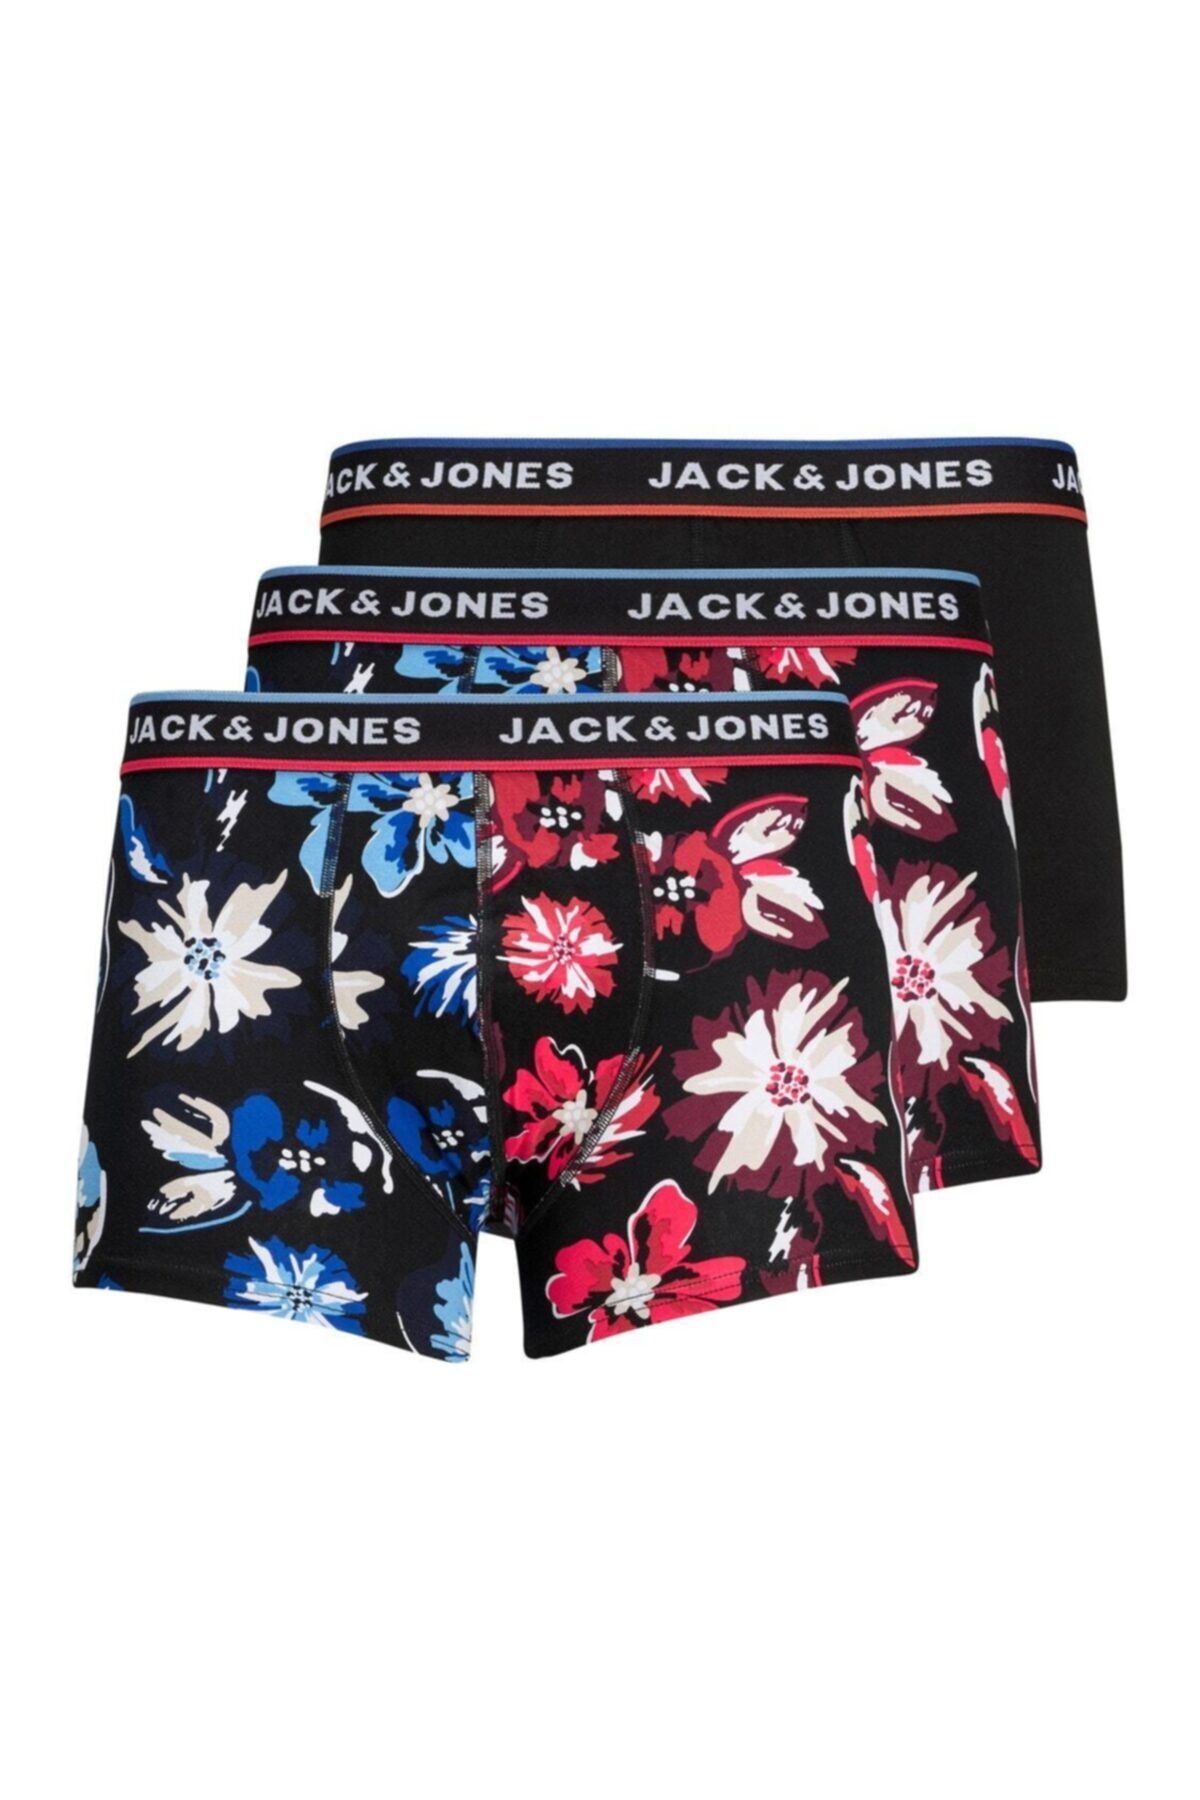 Jack & Jones Jack Jones Colors Erkek 3 Lü Paket Erkek Baxer